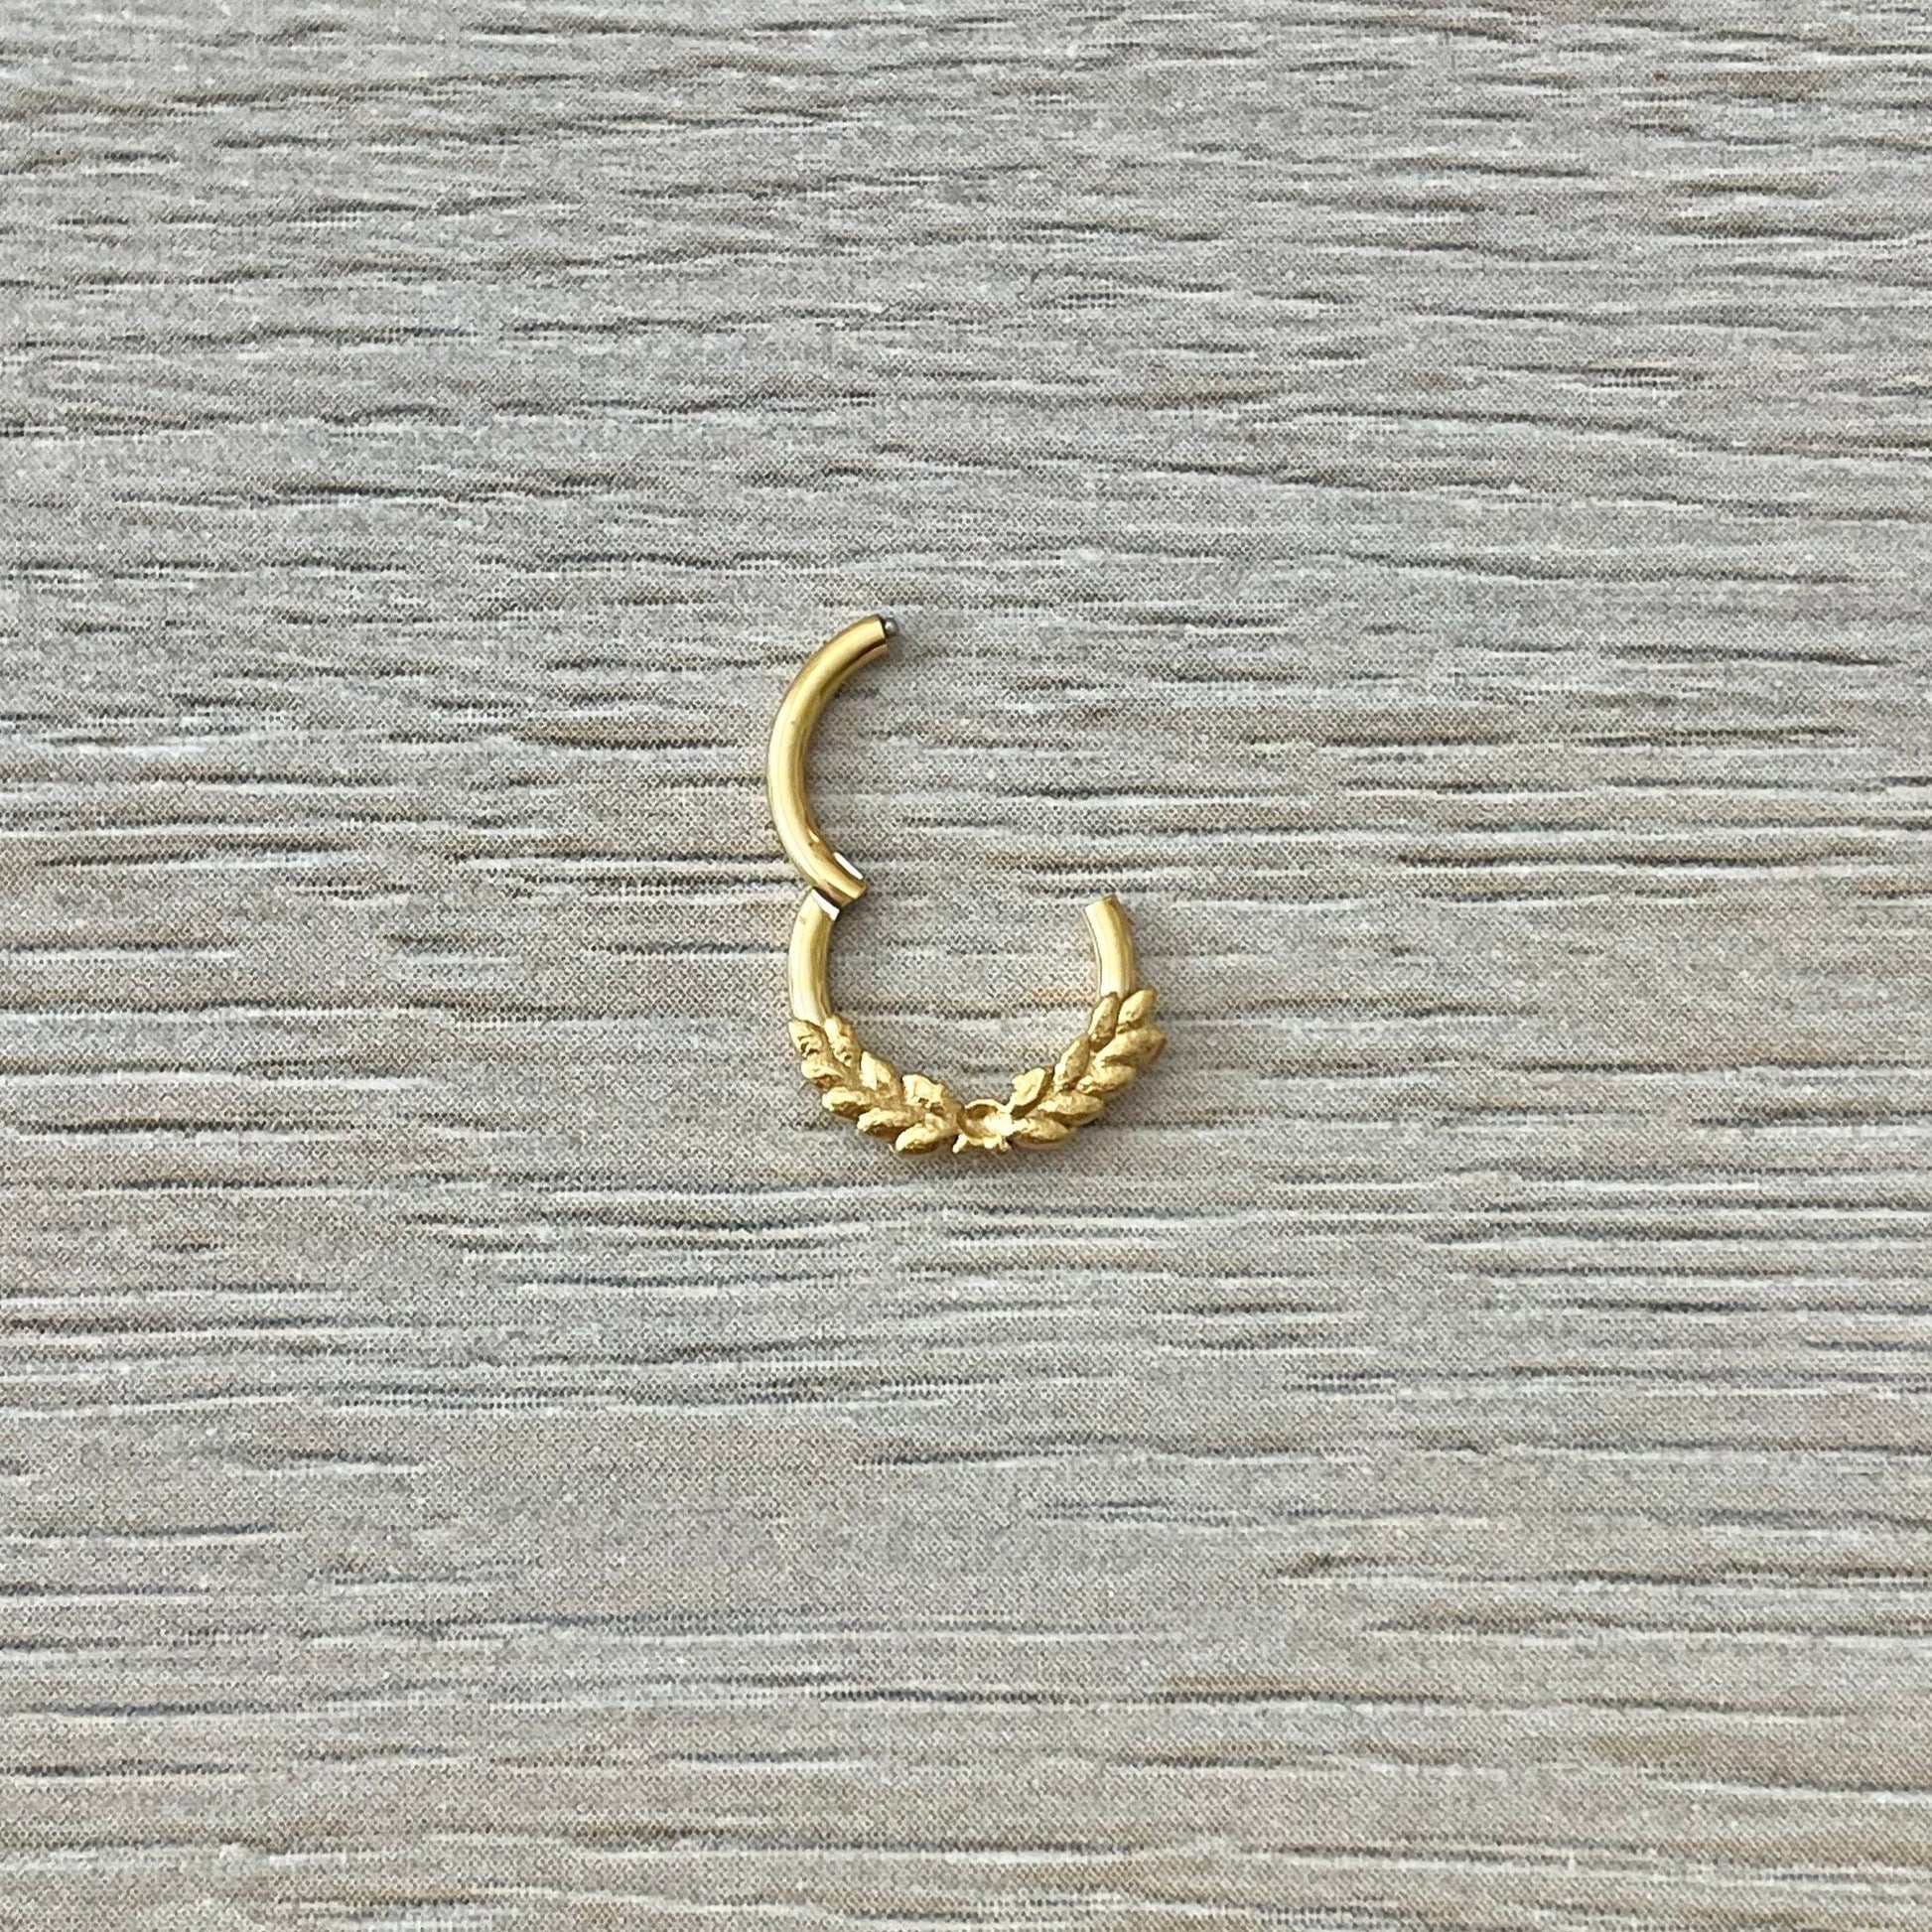 Leaf Laurel Daith Earring (16G | 8mm | Surgical Steel | Silver, Rose Gold, or Gold)